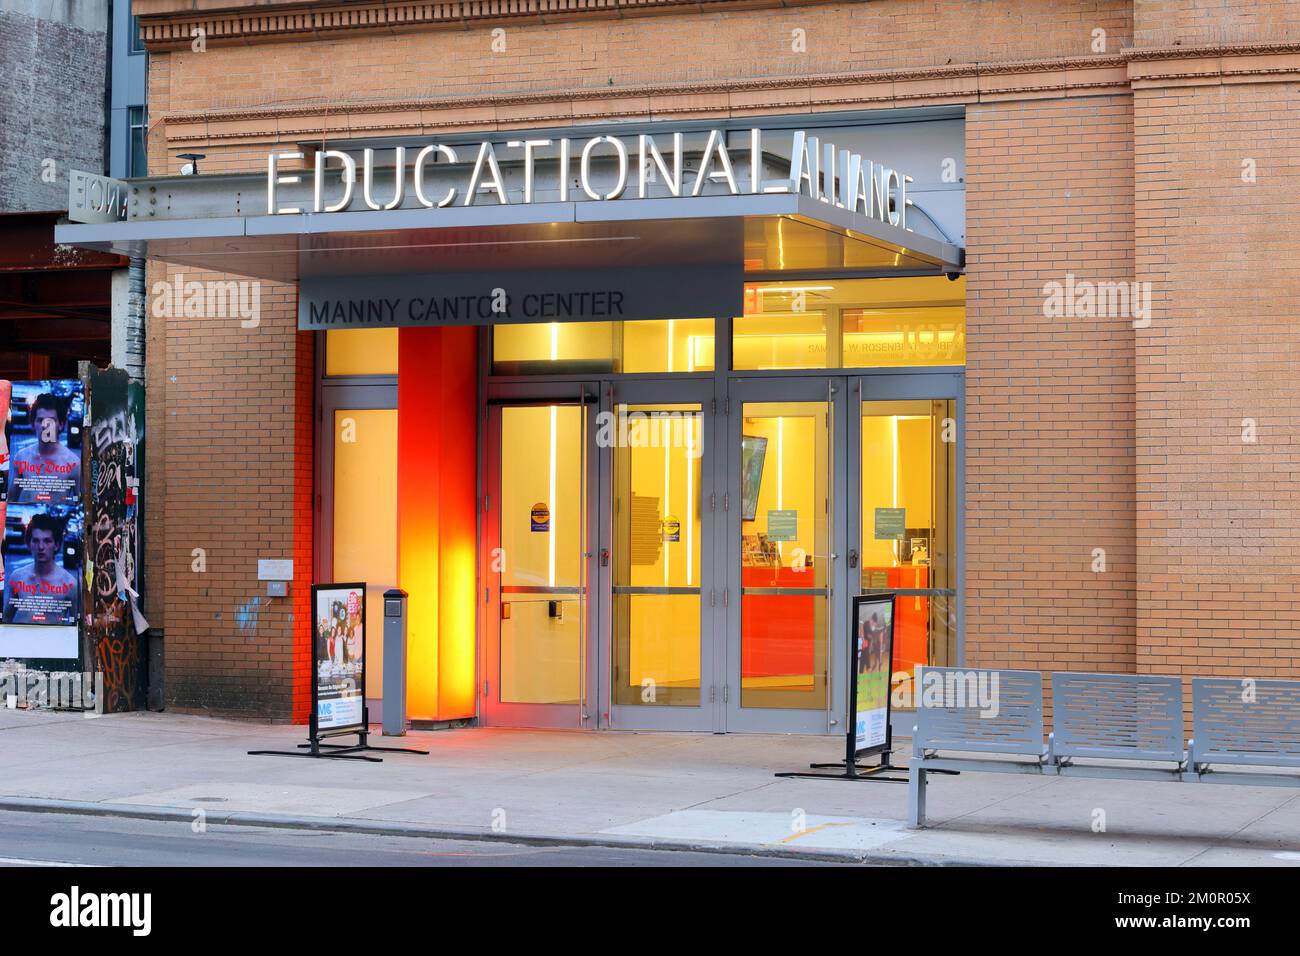 Manny Cantor Center @ Educational Alliance, 197 E Broadway, New York, NYC Schaufenster Foto des Gemeindezentrums in Manhattan Chinatown/Lower East Side Stockfoto